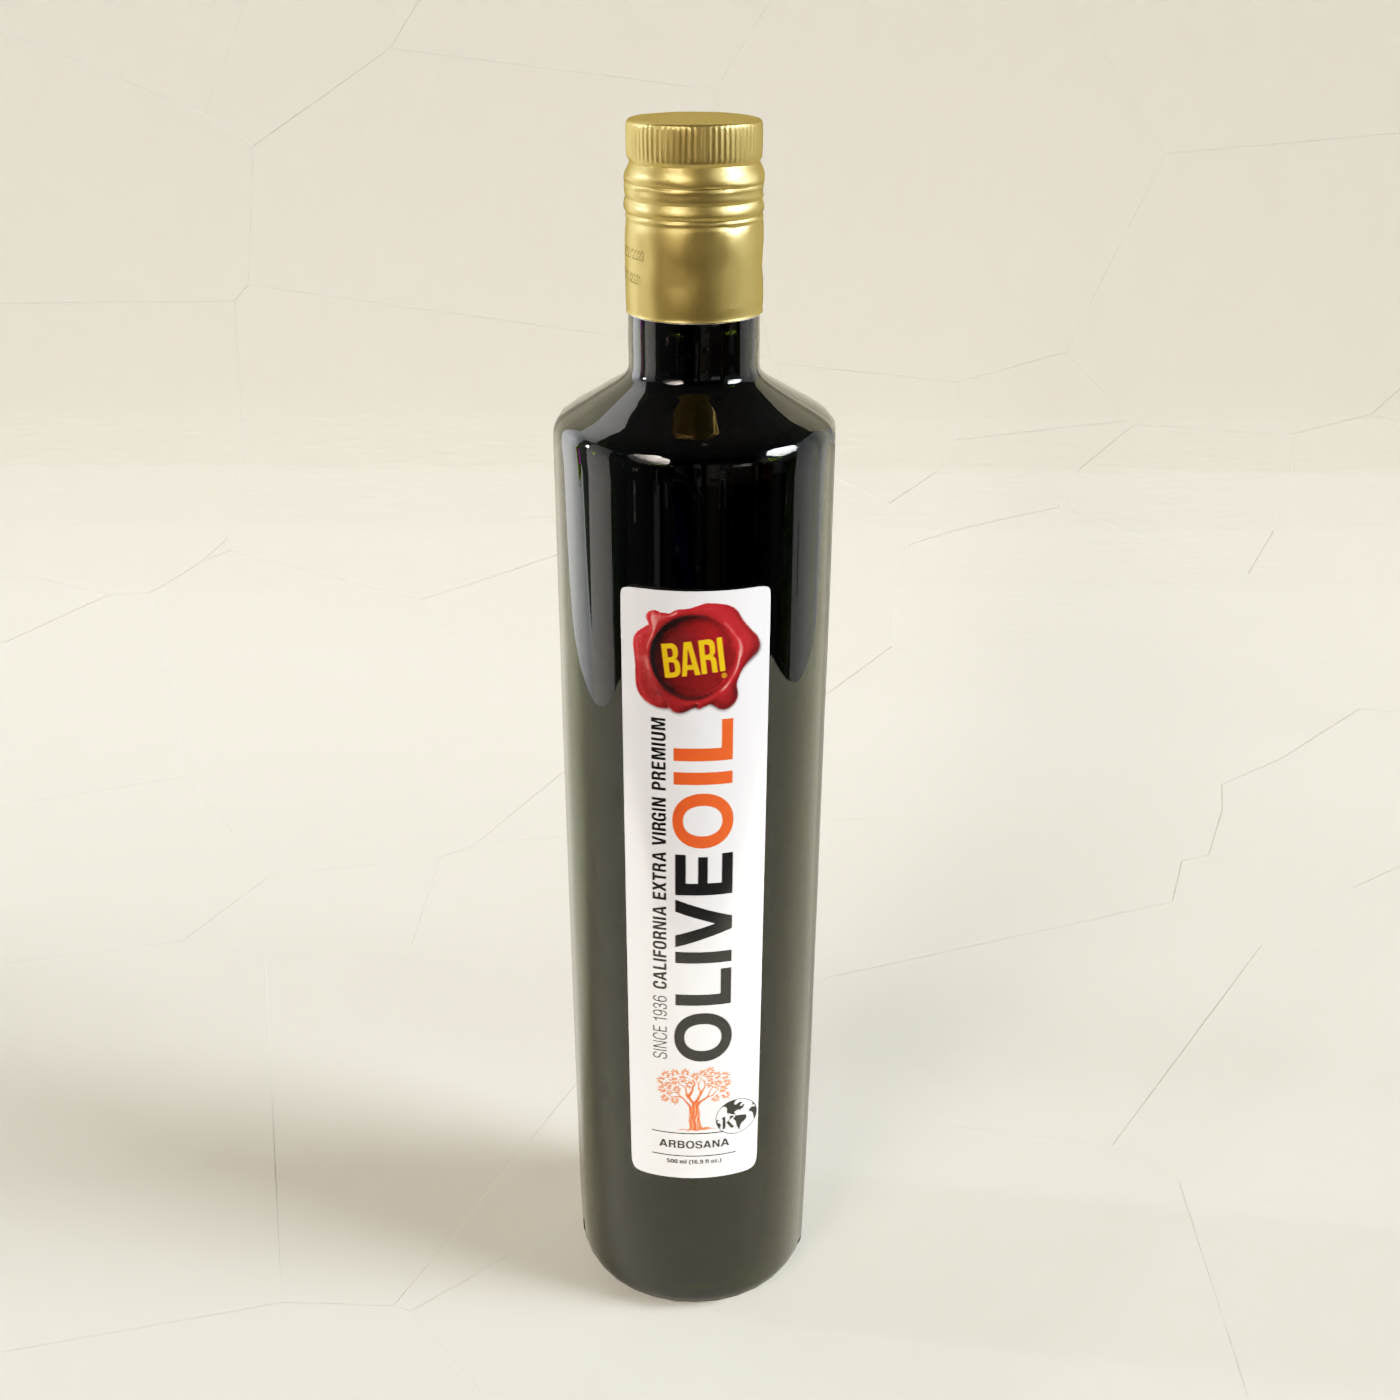 Arbosana Extra Virgin Olive Oil - 500mL